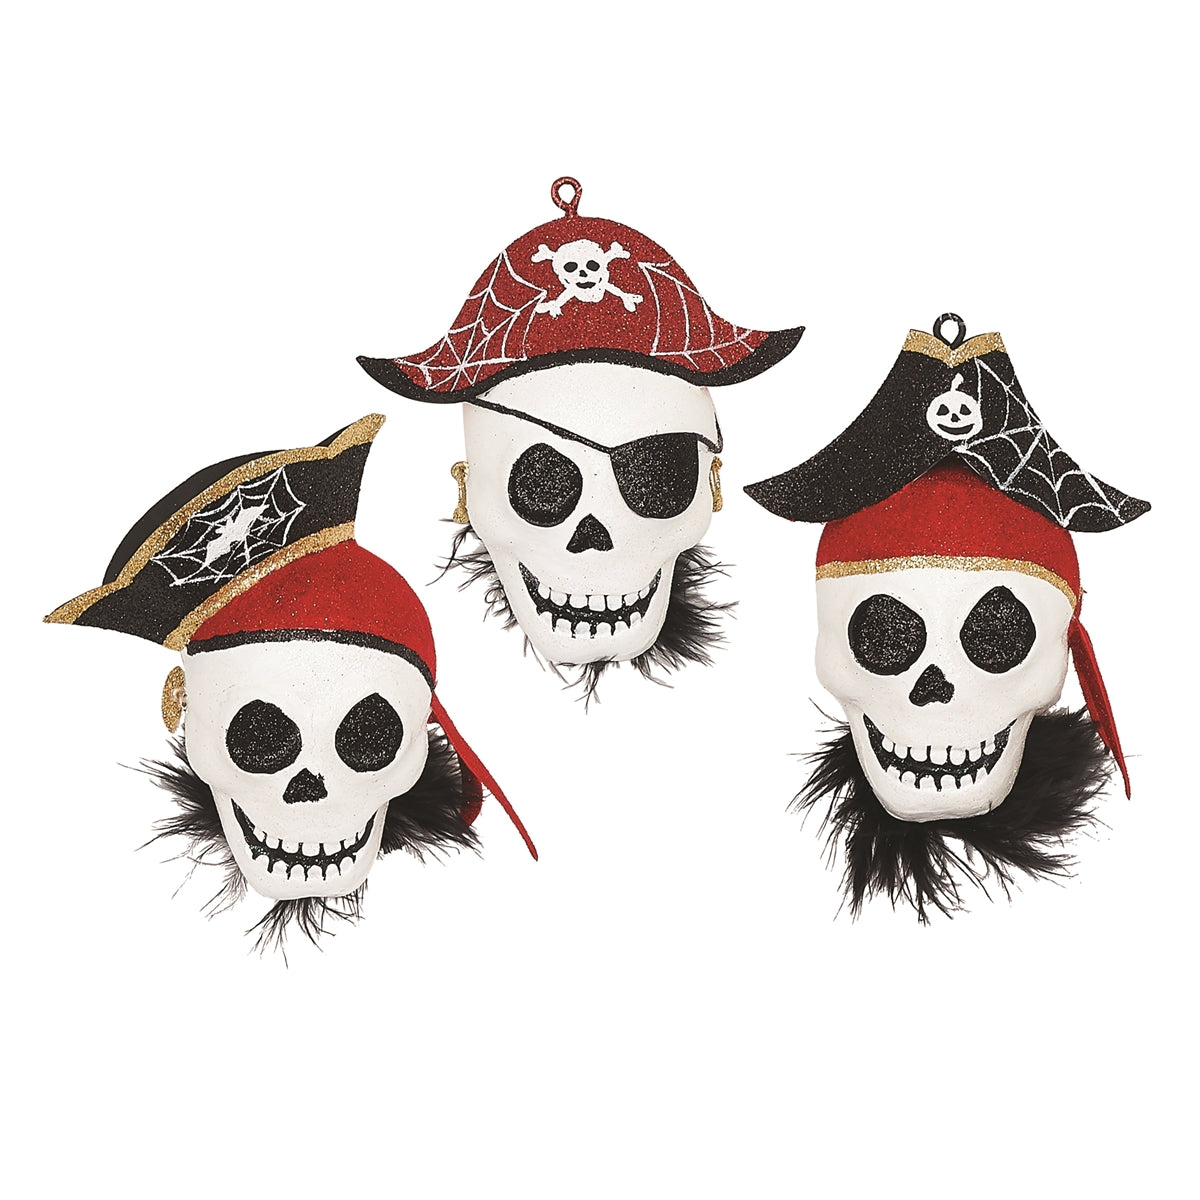 Pirate Skull Ornaments - Halloween Decorations